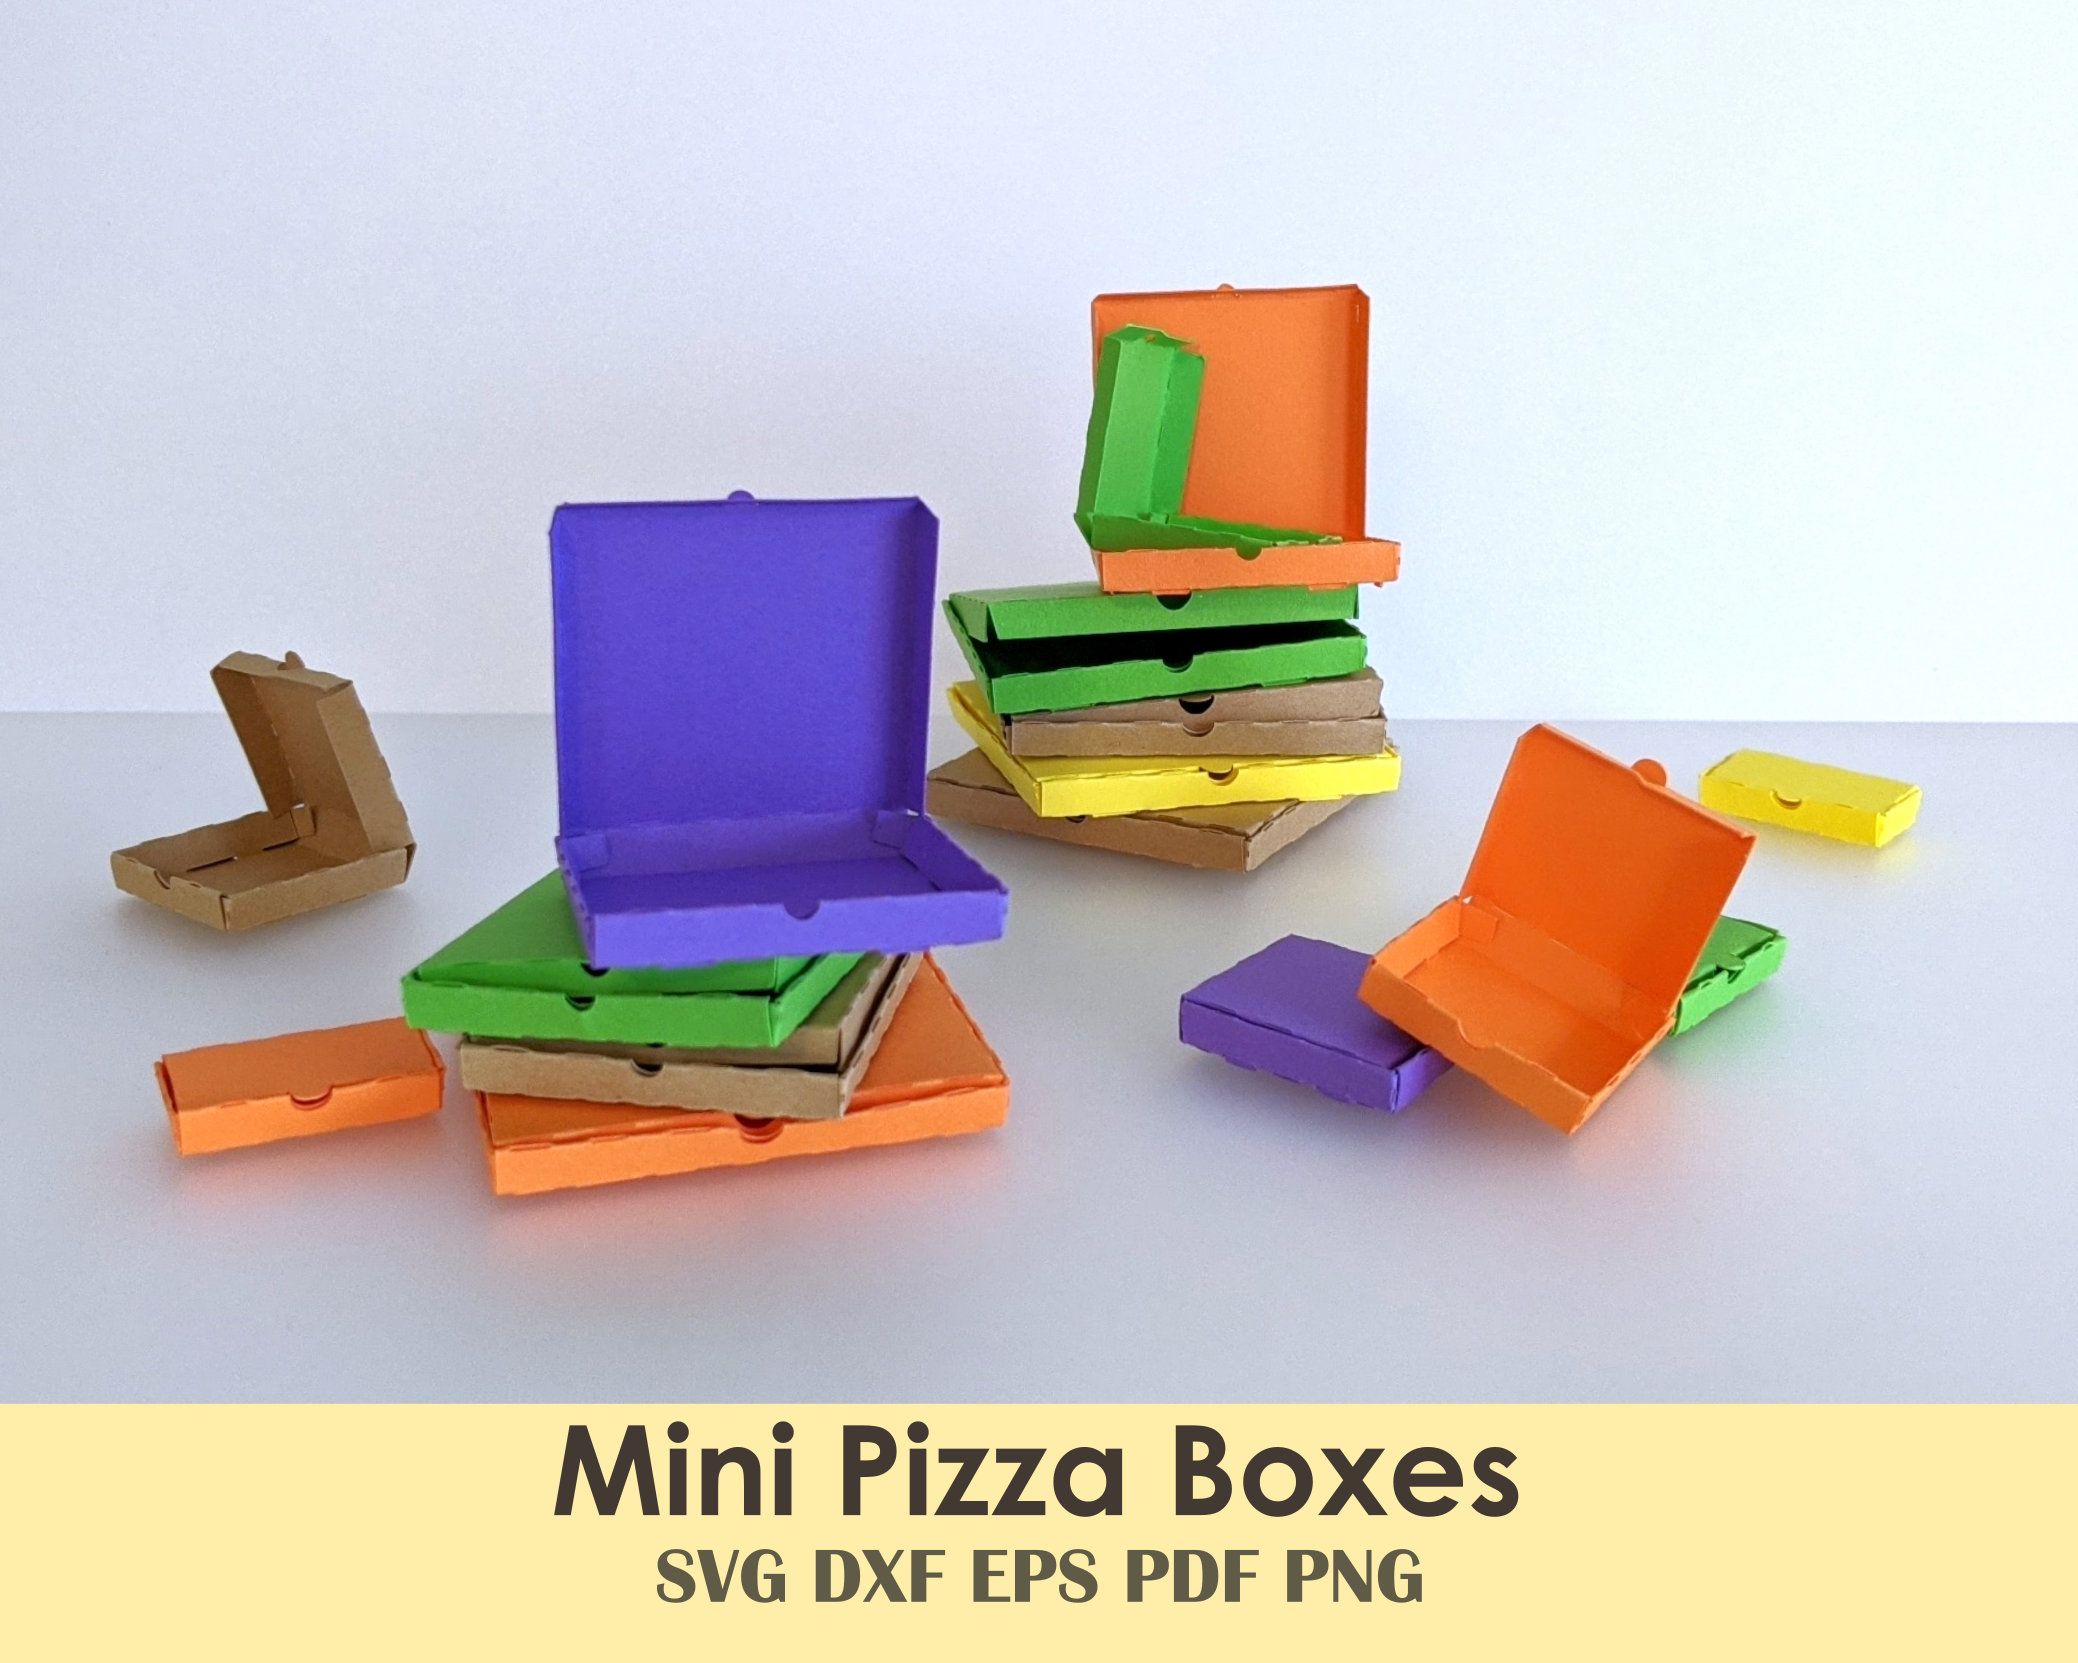 Pizza de bonbons - Format mini en boîte de 85g